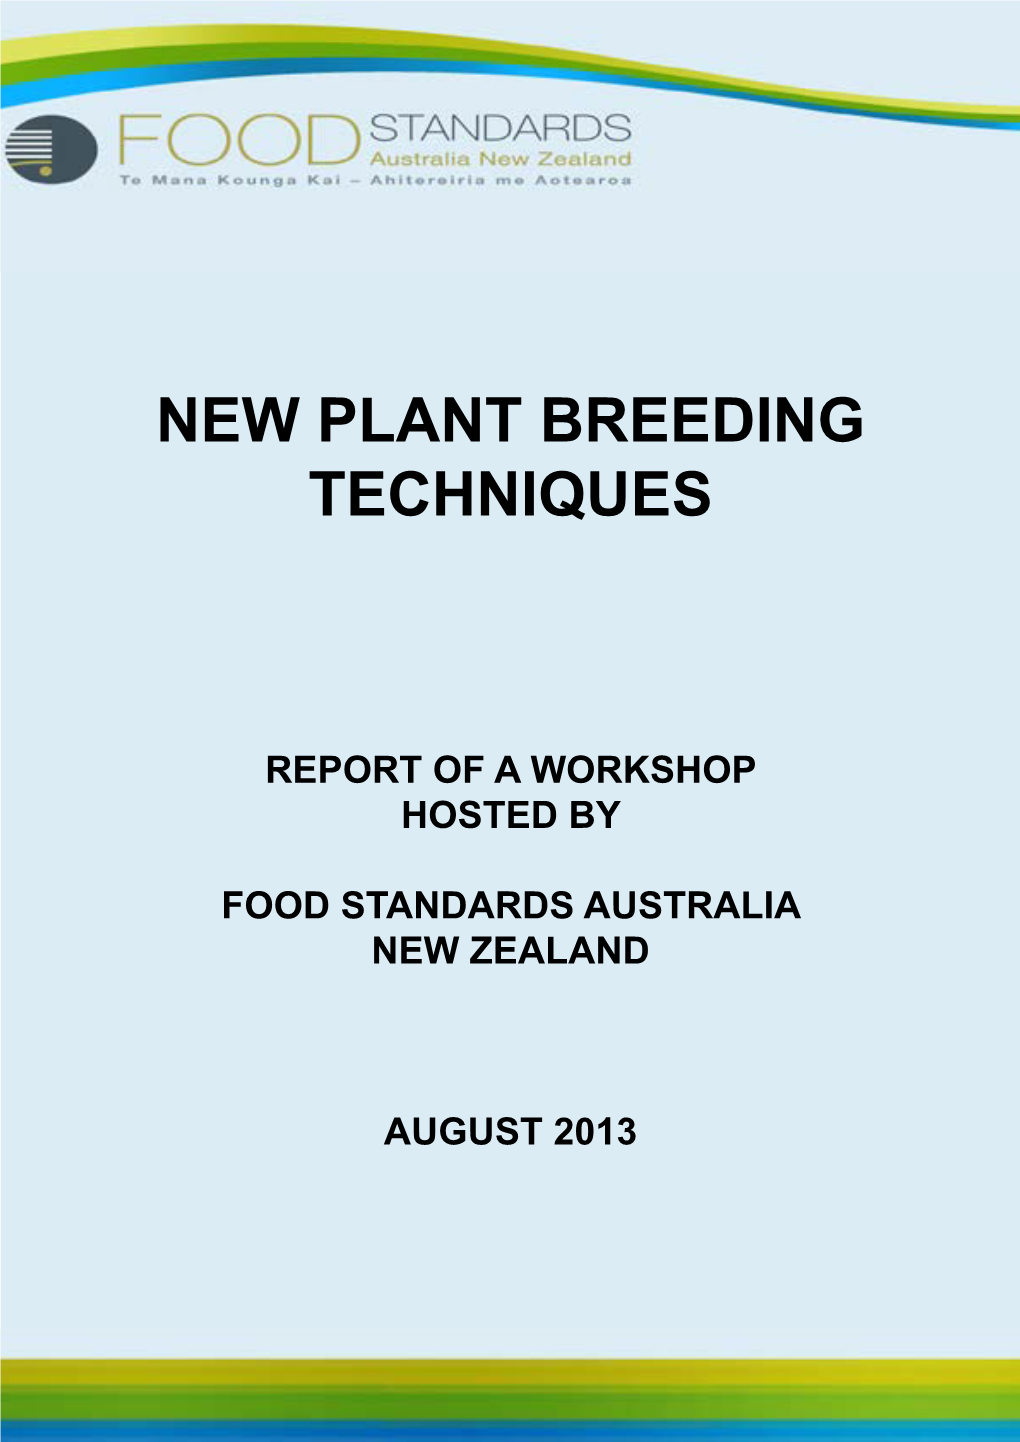 New Plant Breeding Techniques 2013 Workshop Report